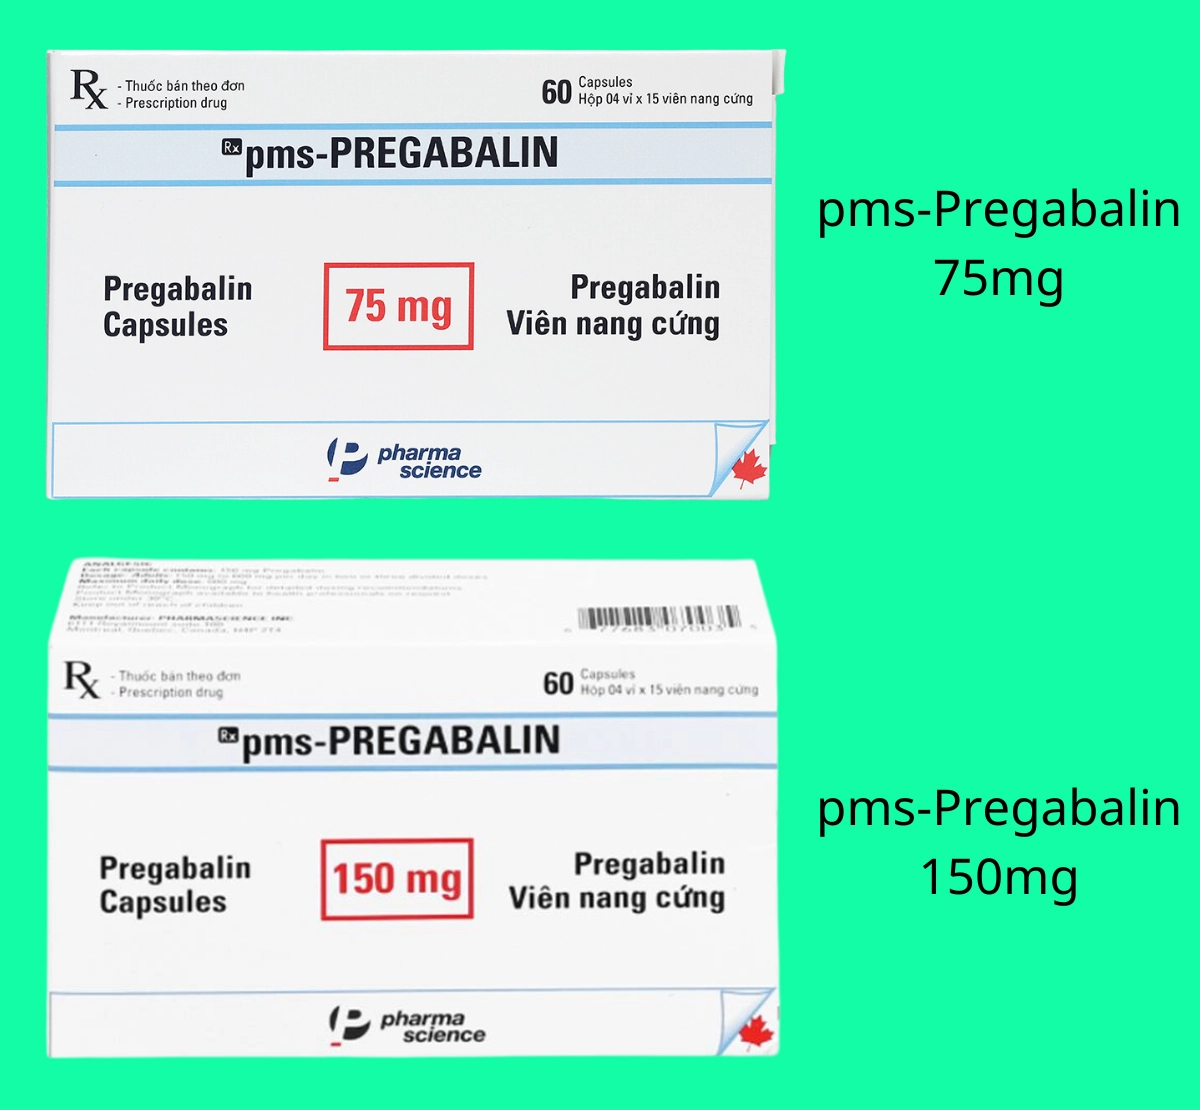 pms-Pregabalin 150mg vs 75mg